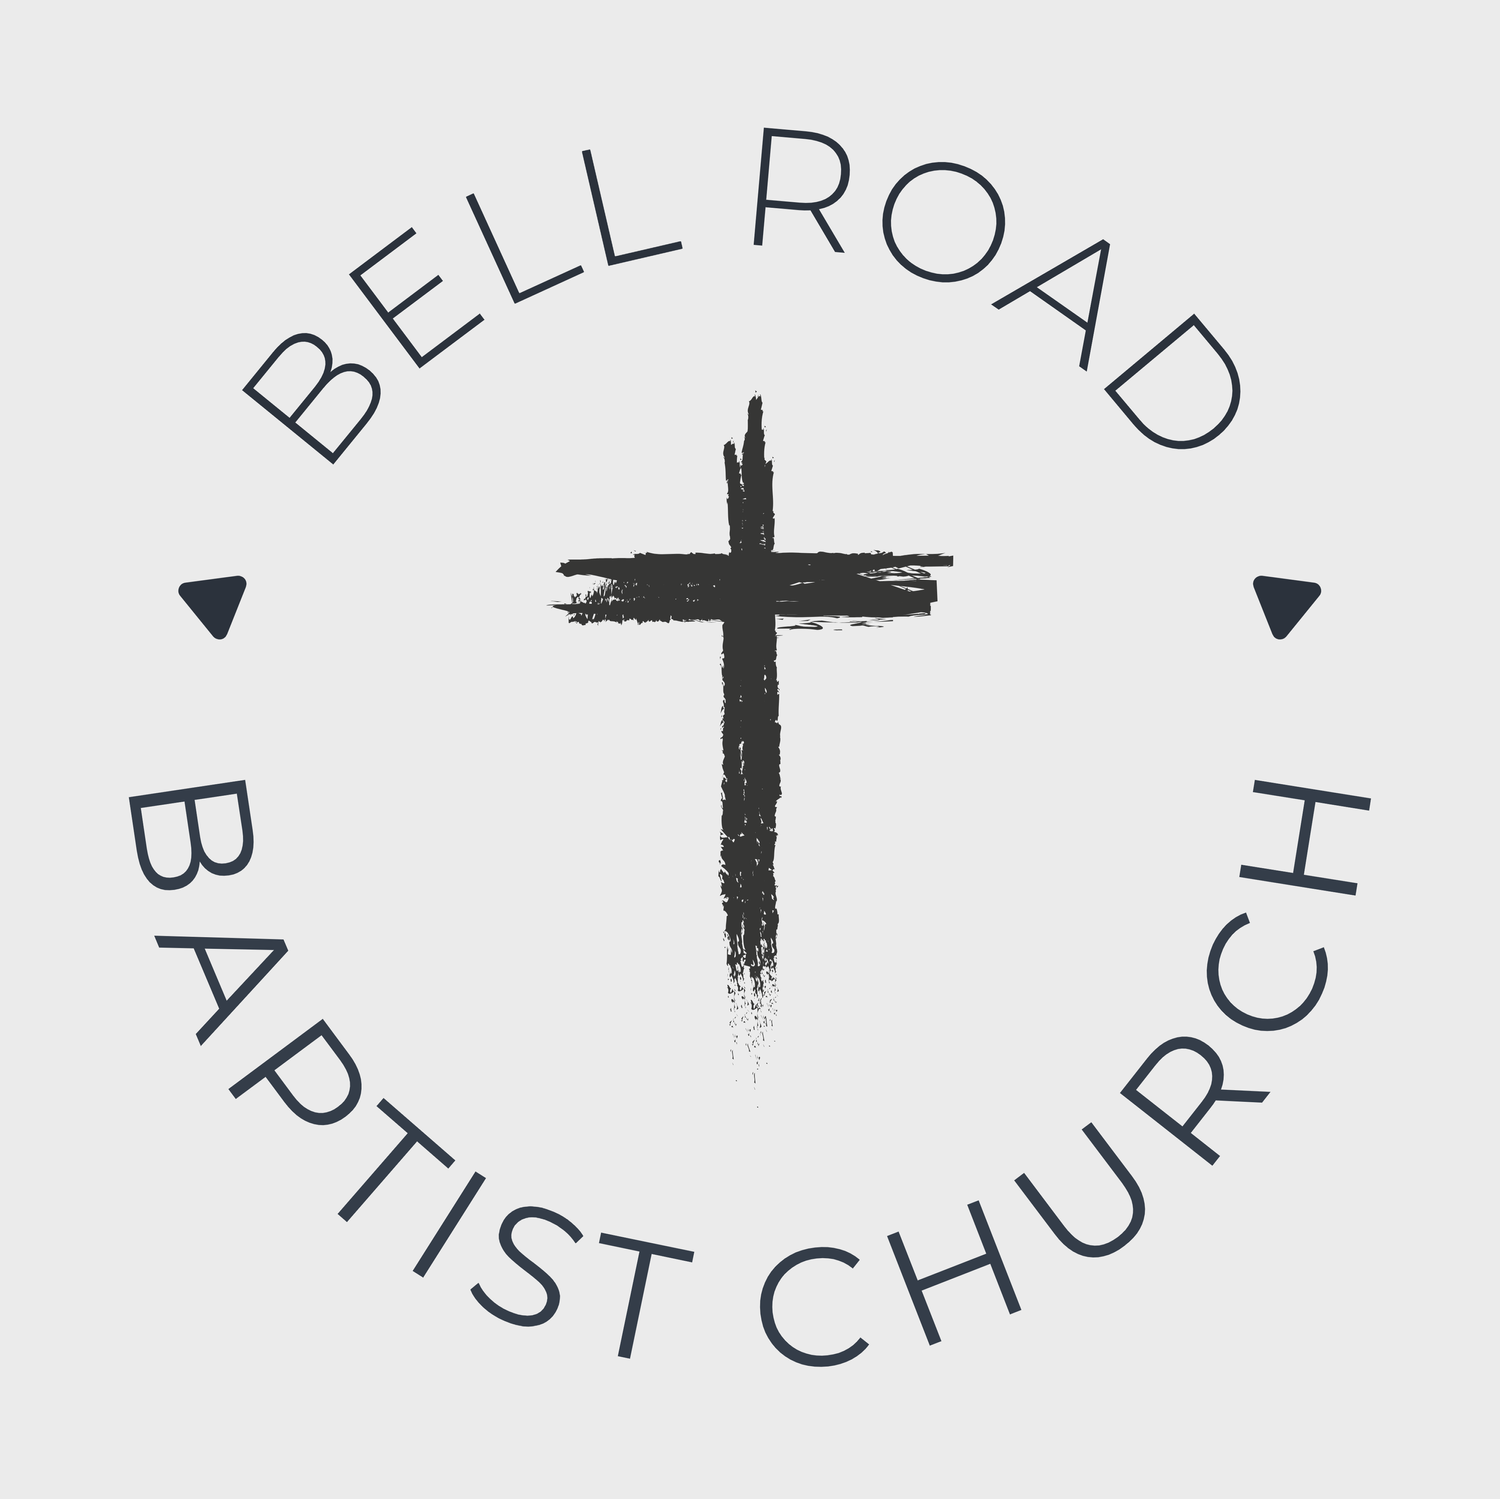 Bell Road Baptist Church